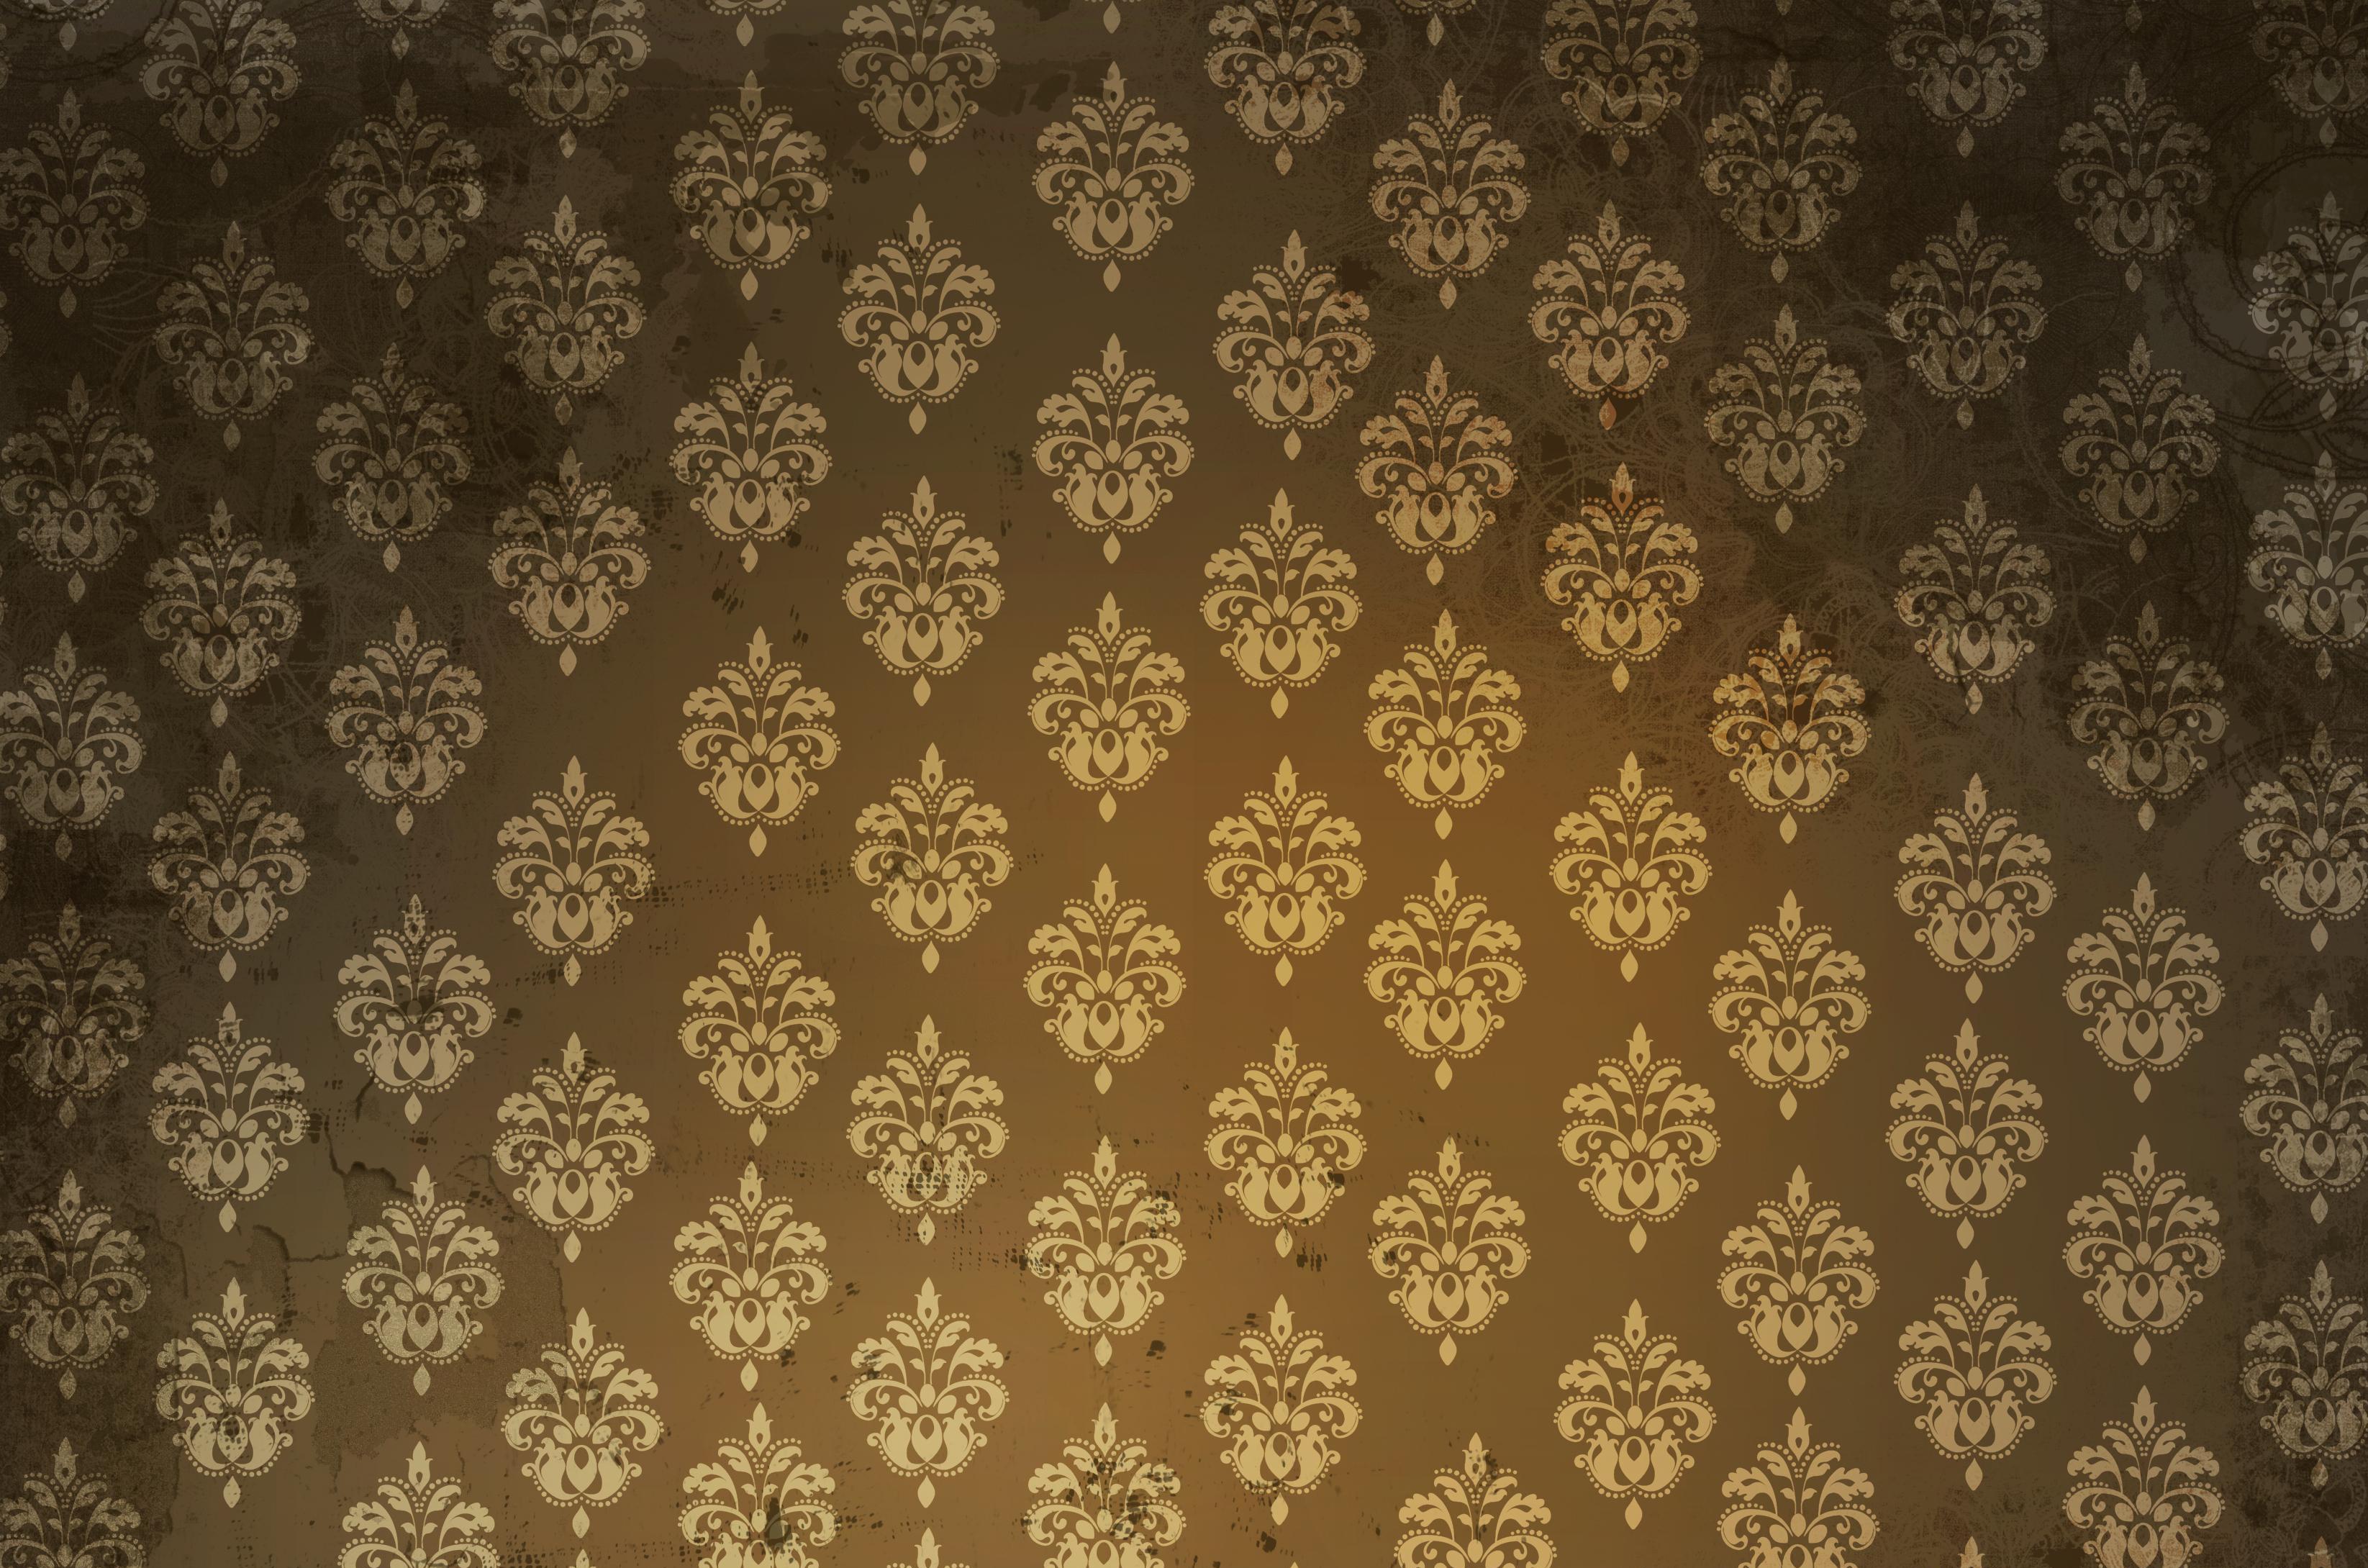 pattern, vintage, patterns - desktop wallpaper